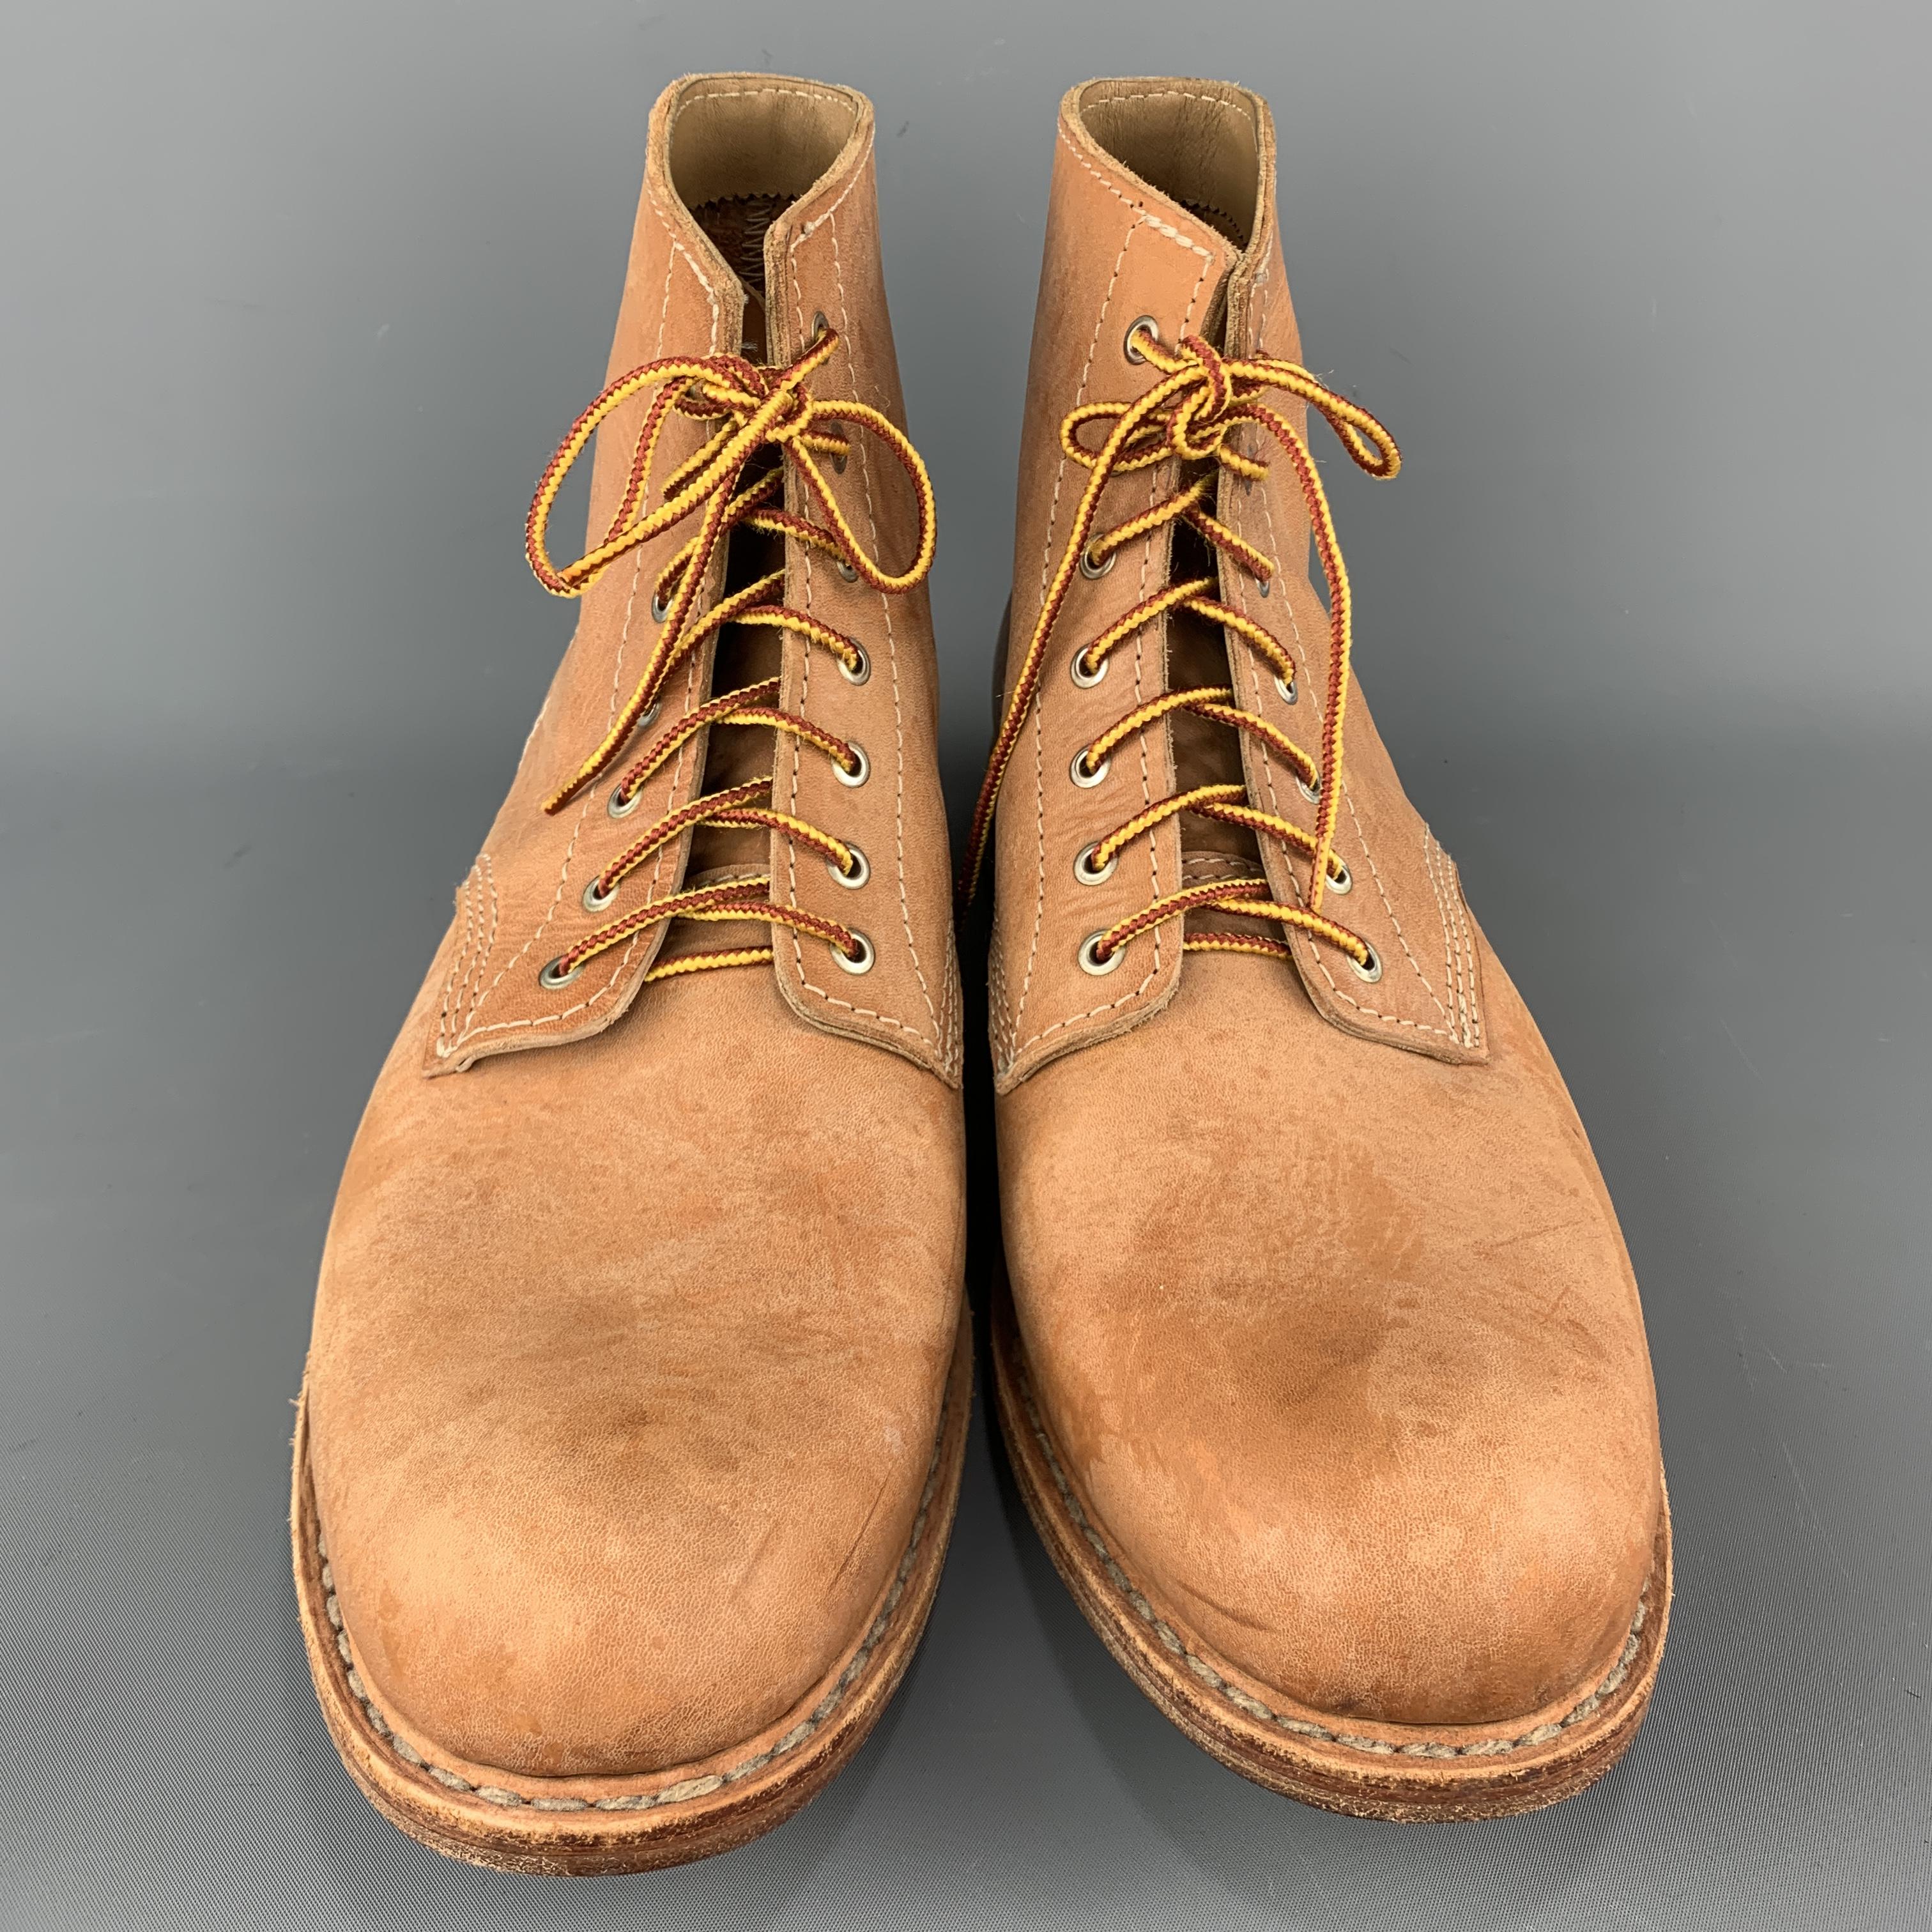 Orange AL'S ATTIRE Size 12 Tan Leather Lace Up Handmade Work Boots